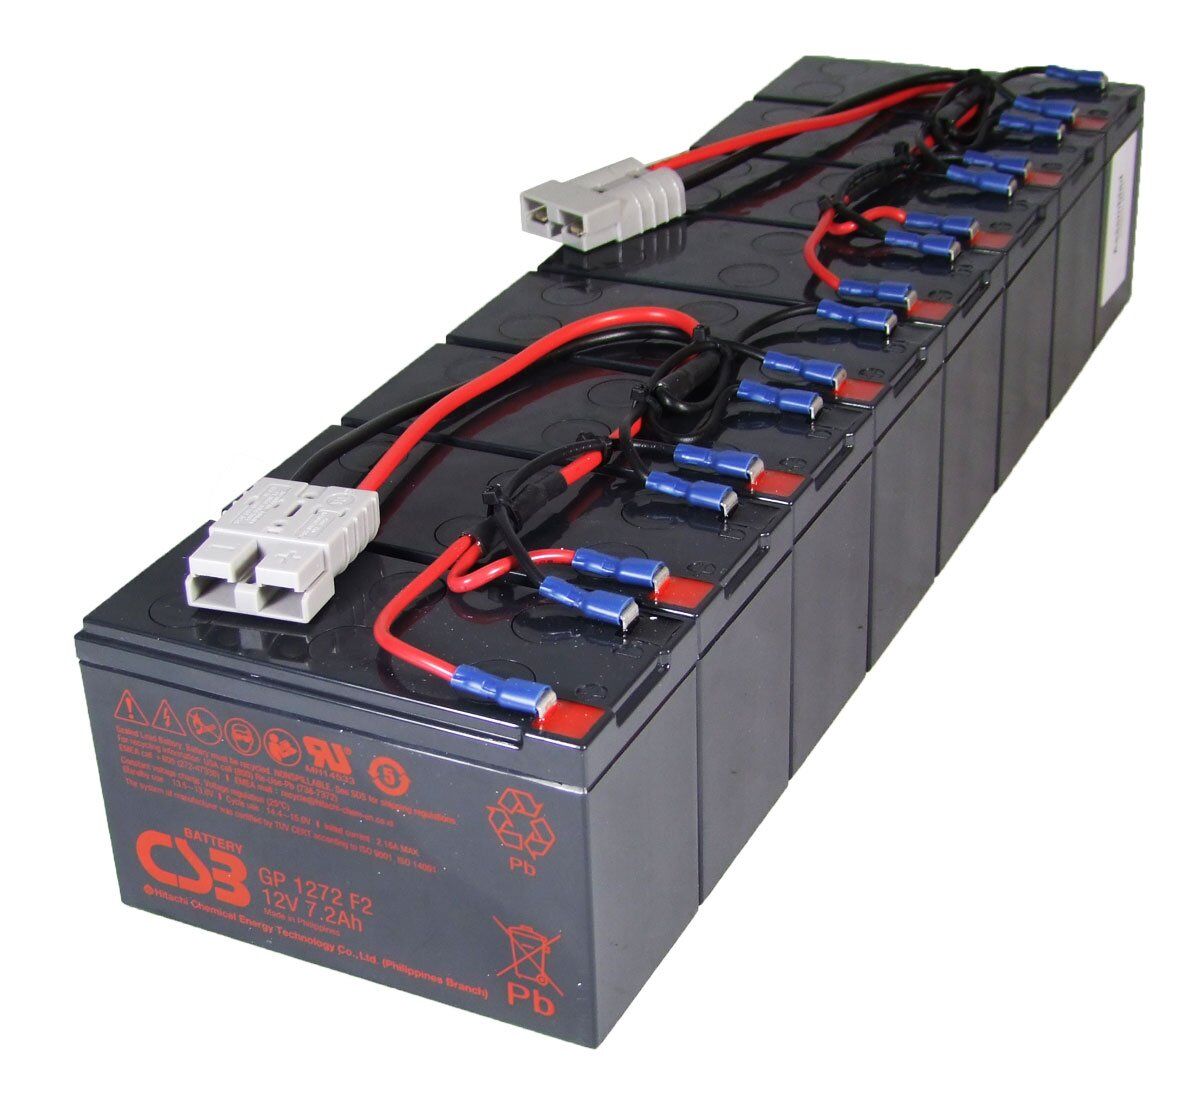 Apc batteries. APC rbc12. Батарея APC rbc105. APC батареи аккумуляторы ups 3000. APC rbc141.